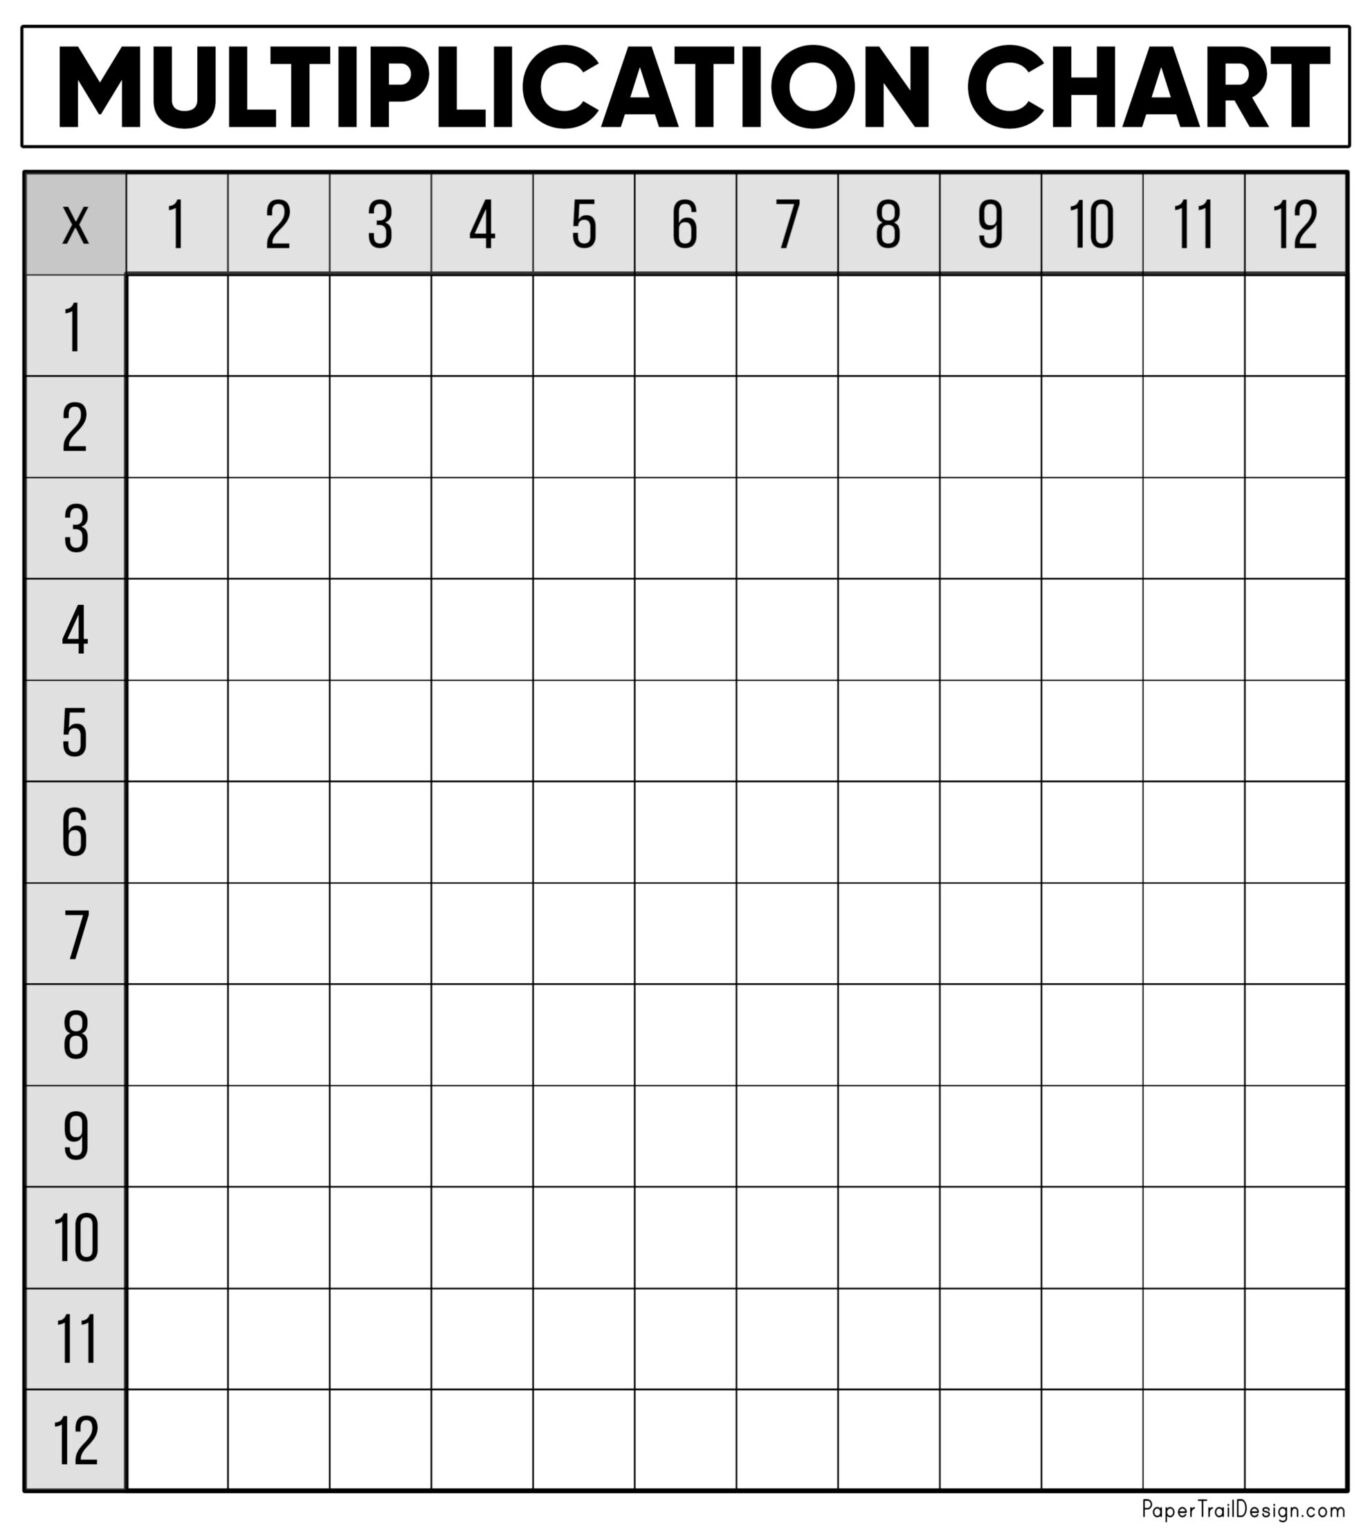 blank-multiplication-chart-printable-sushiklo